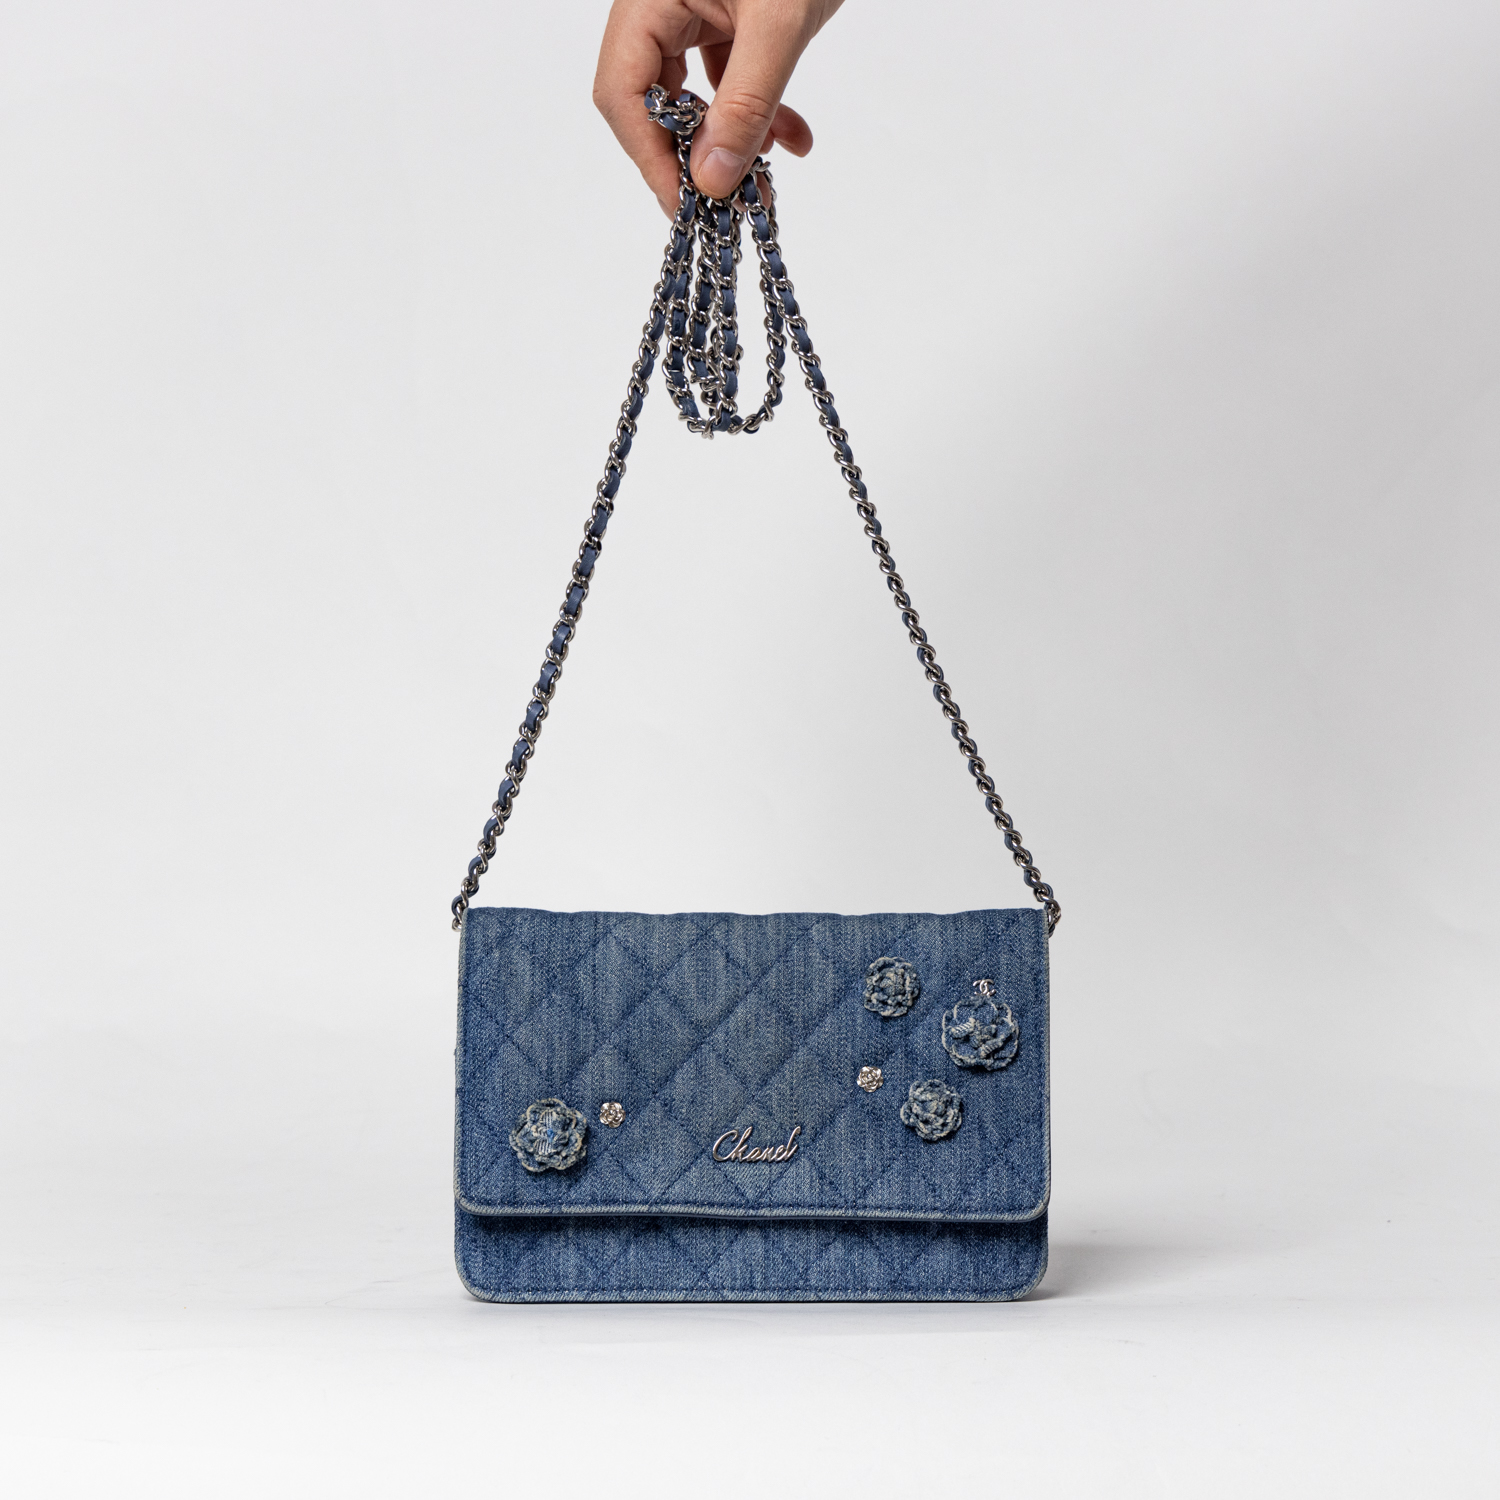 Chanel Wallet on Chain WOC Denim Blau Jeans mit Kamelien